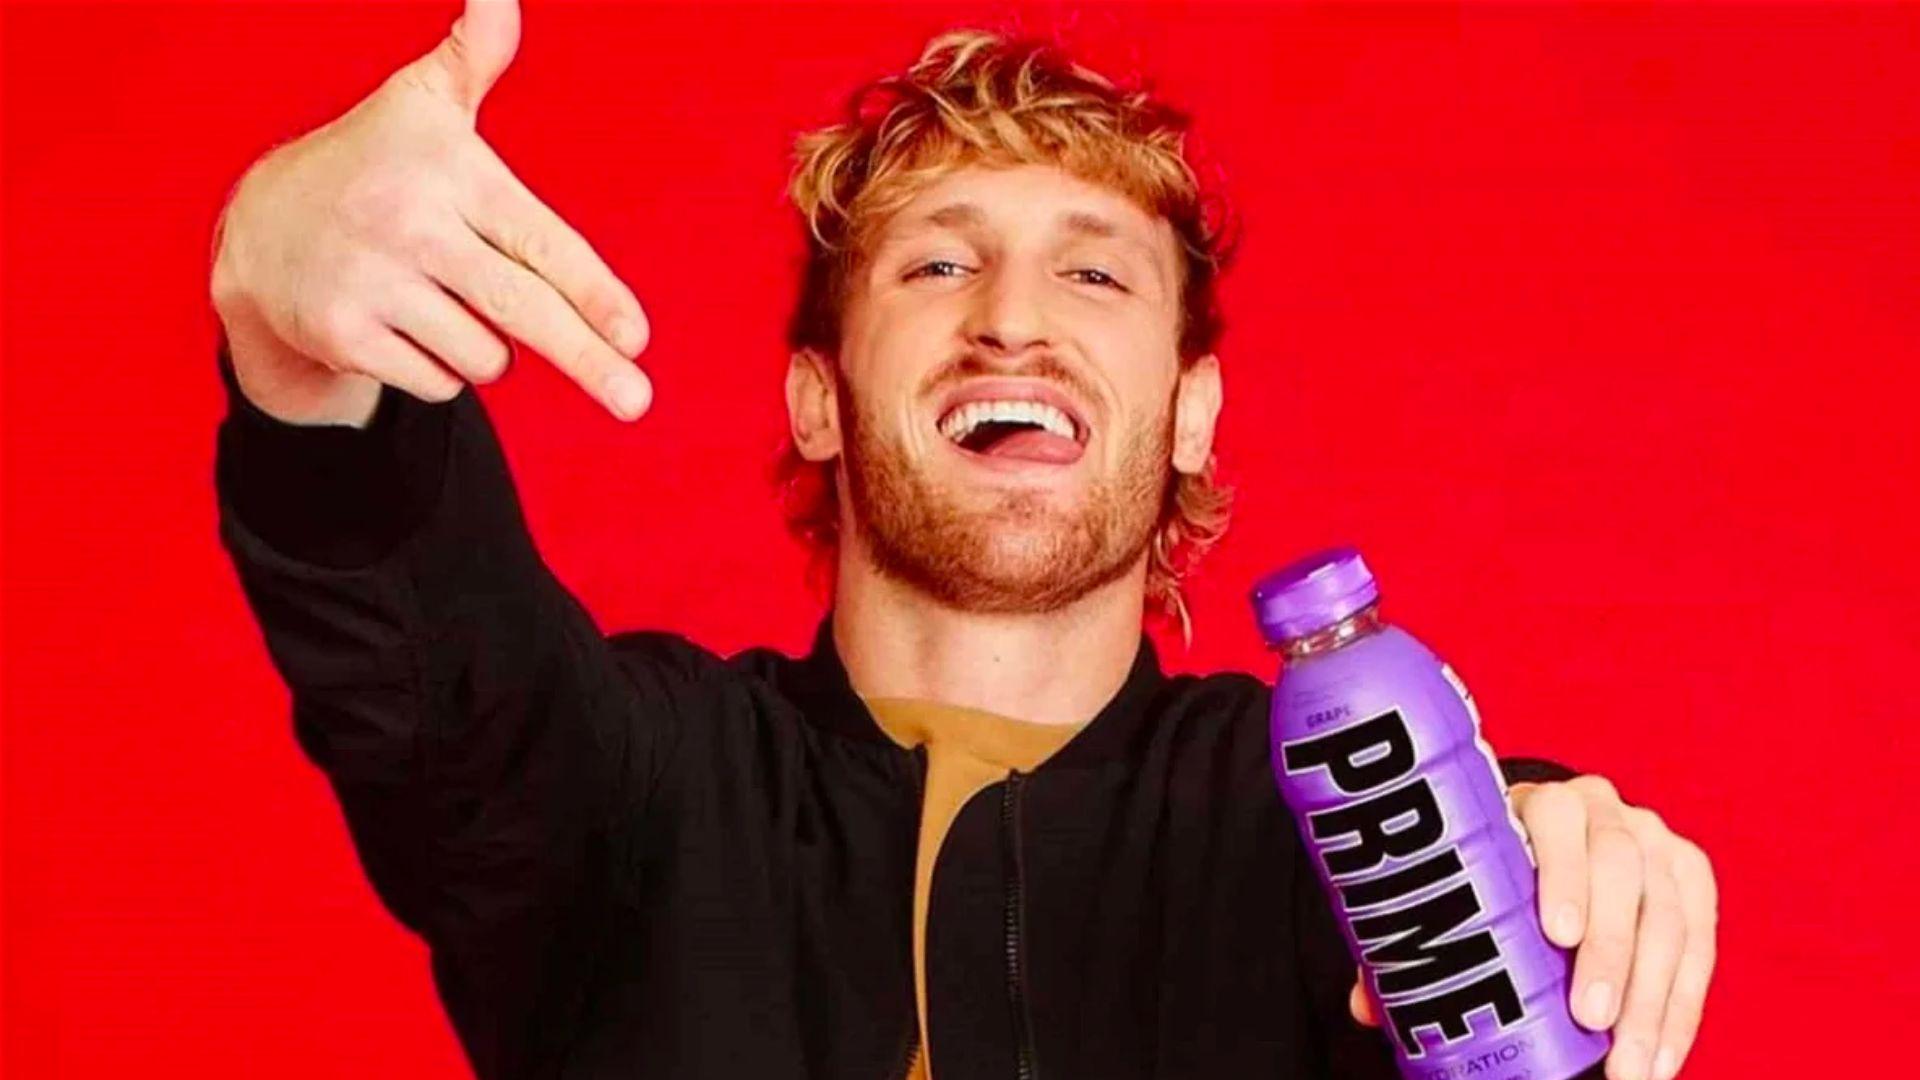 Logan Paul with purple bottle of prime